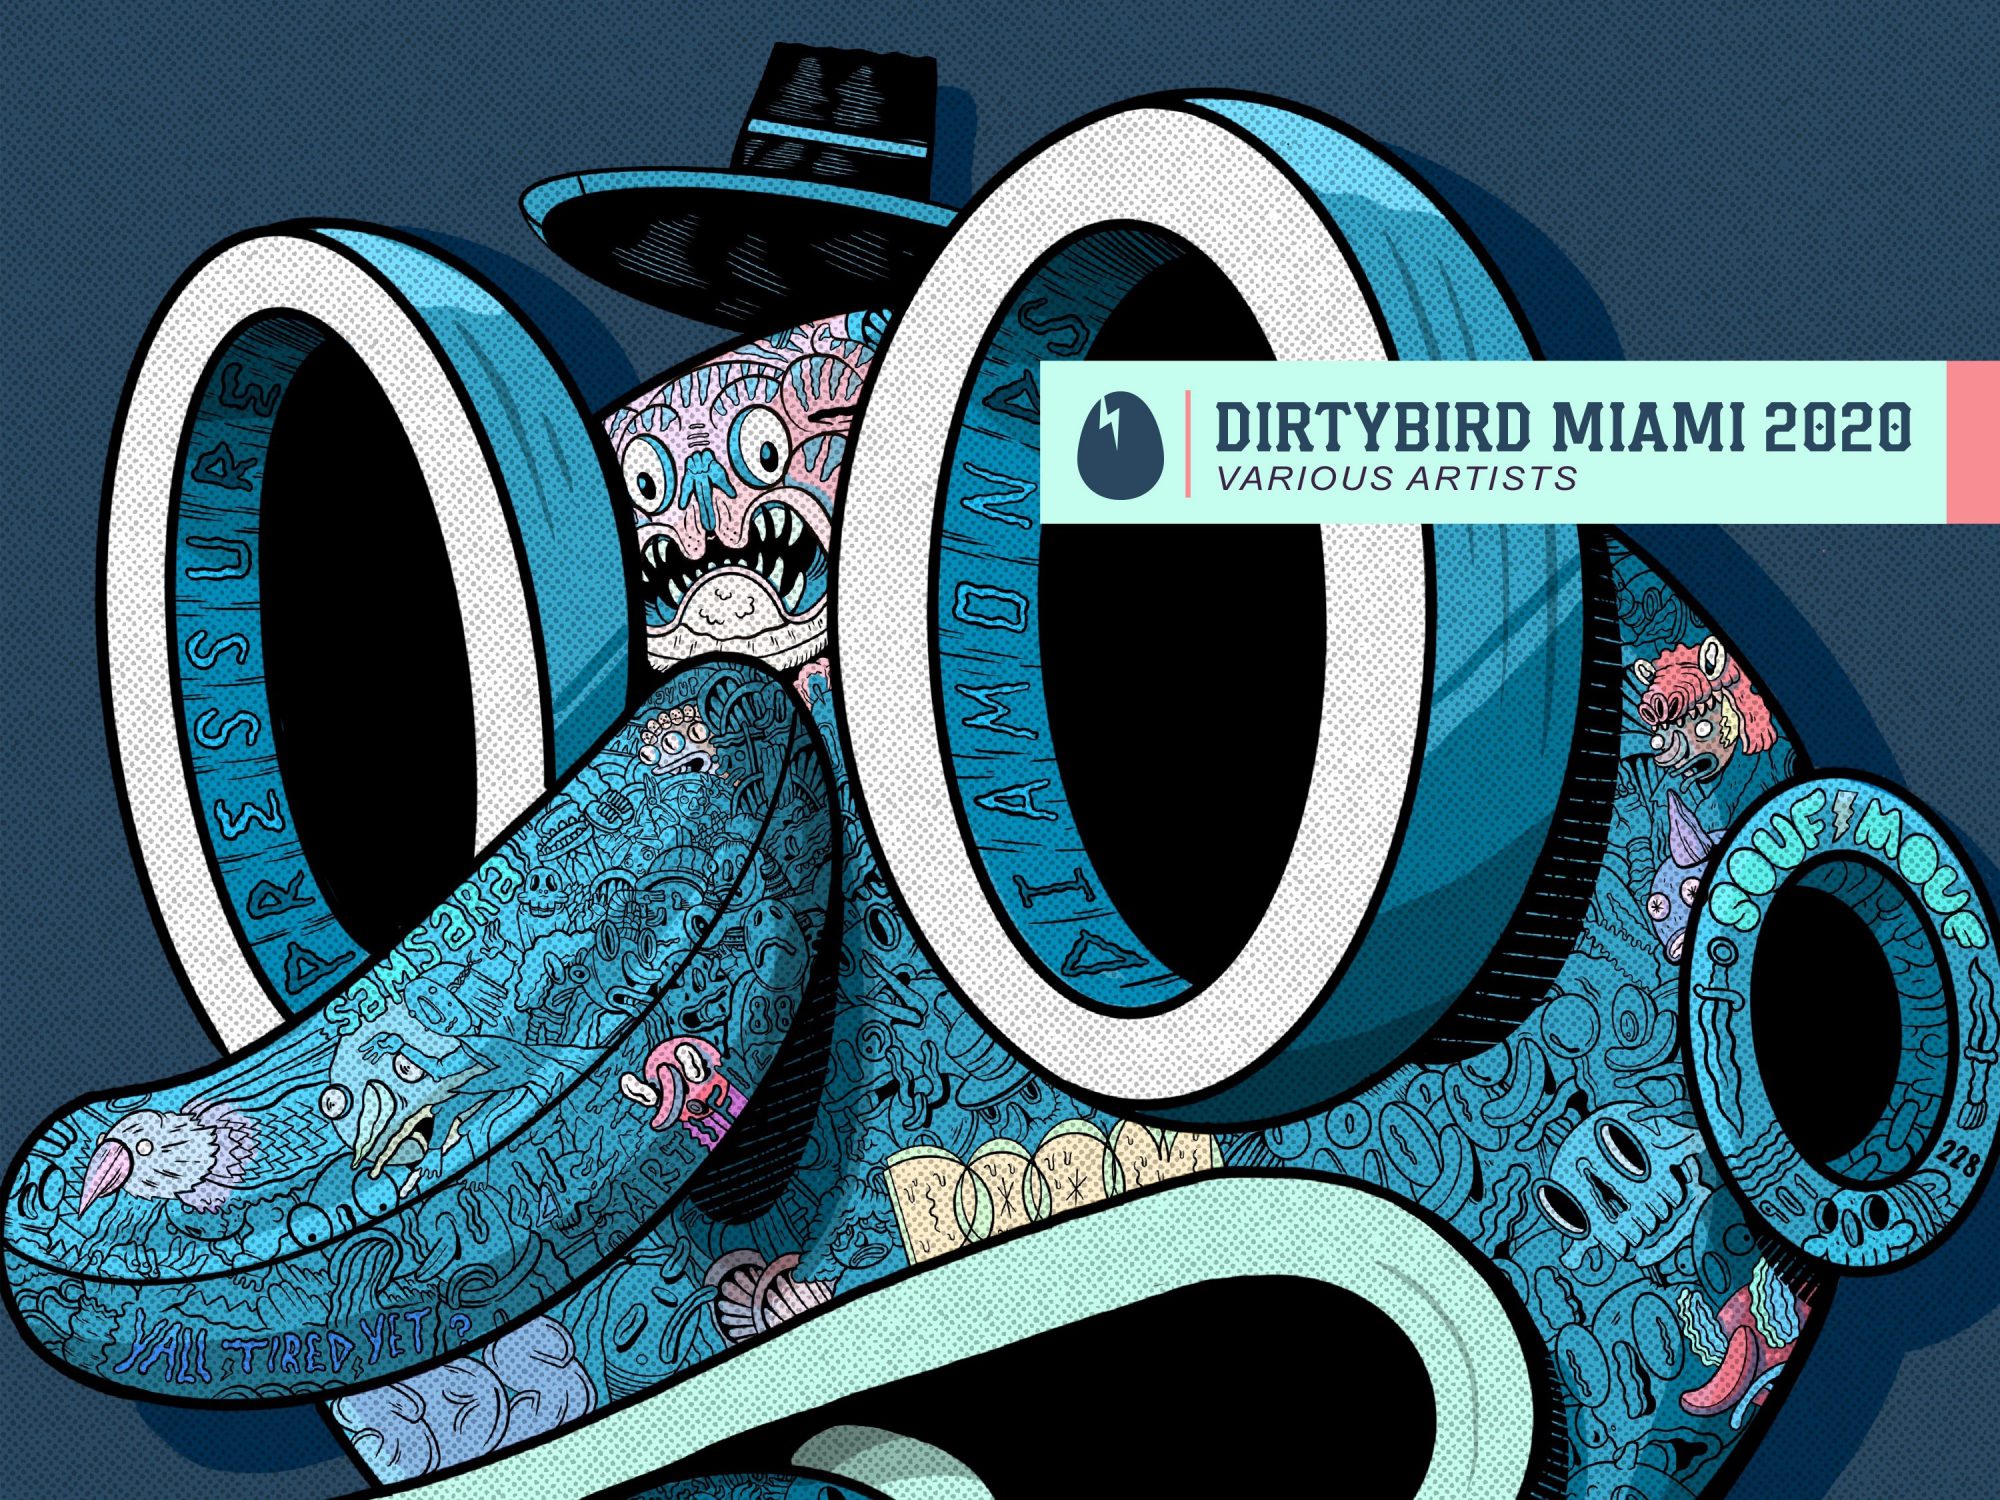 Dirtybird Miami 2020 Album Artwork